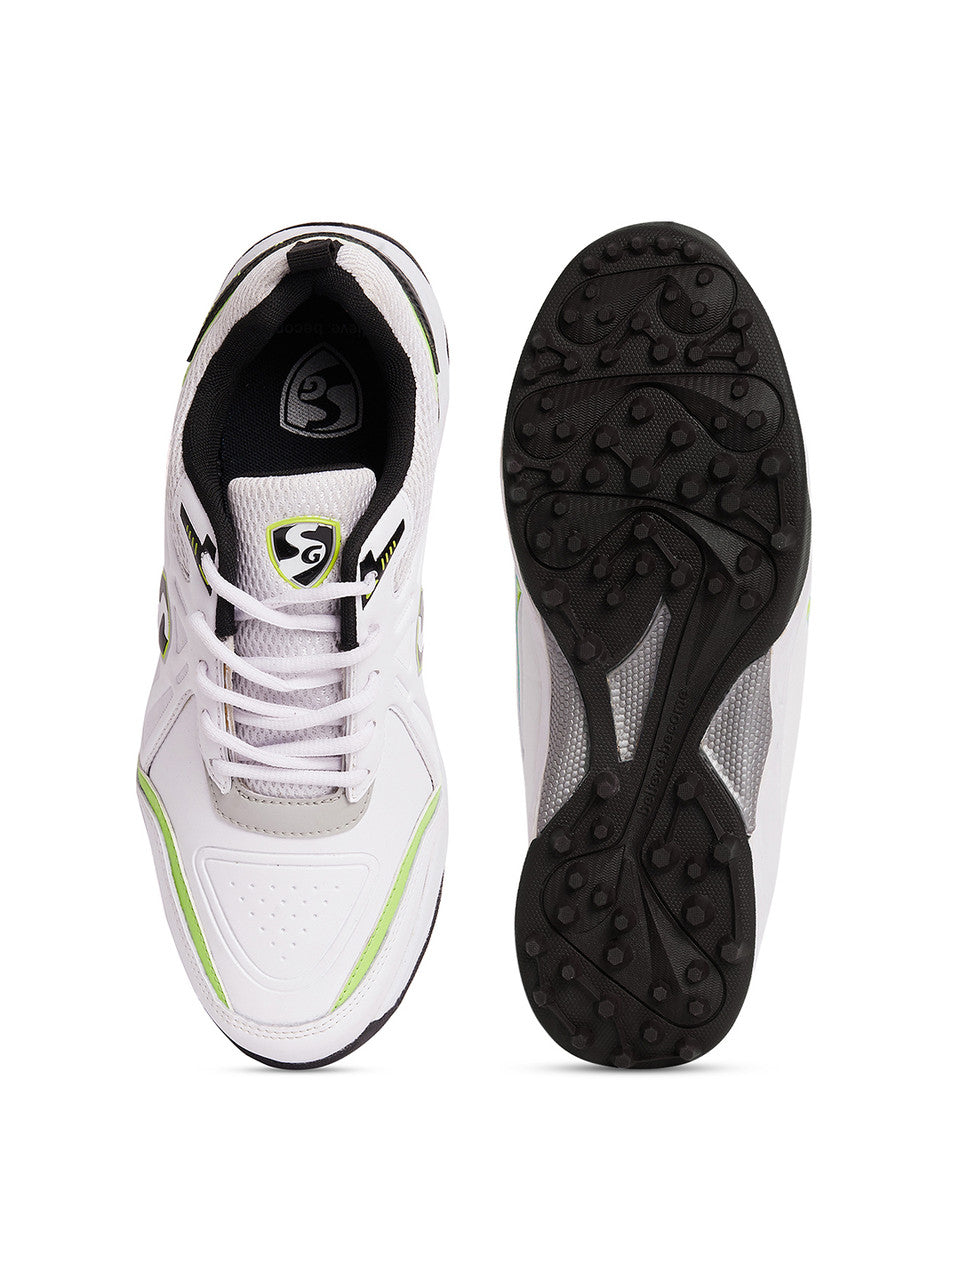 SG Scorer 5.0 Cricket Shoes